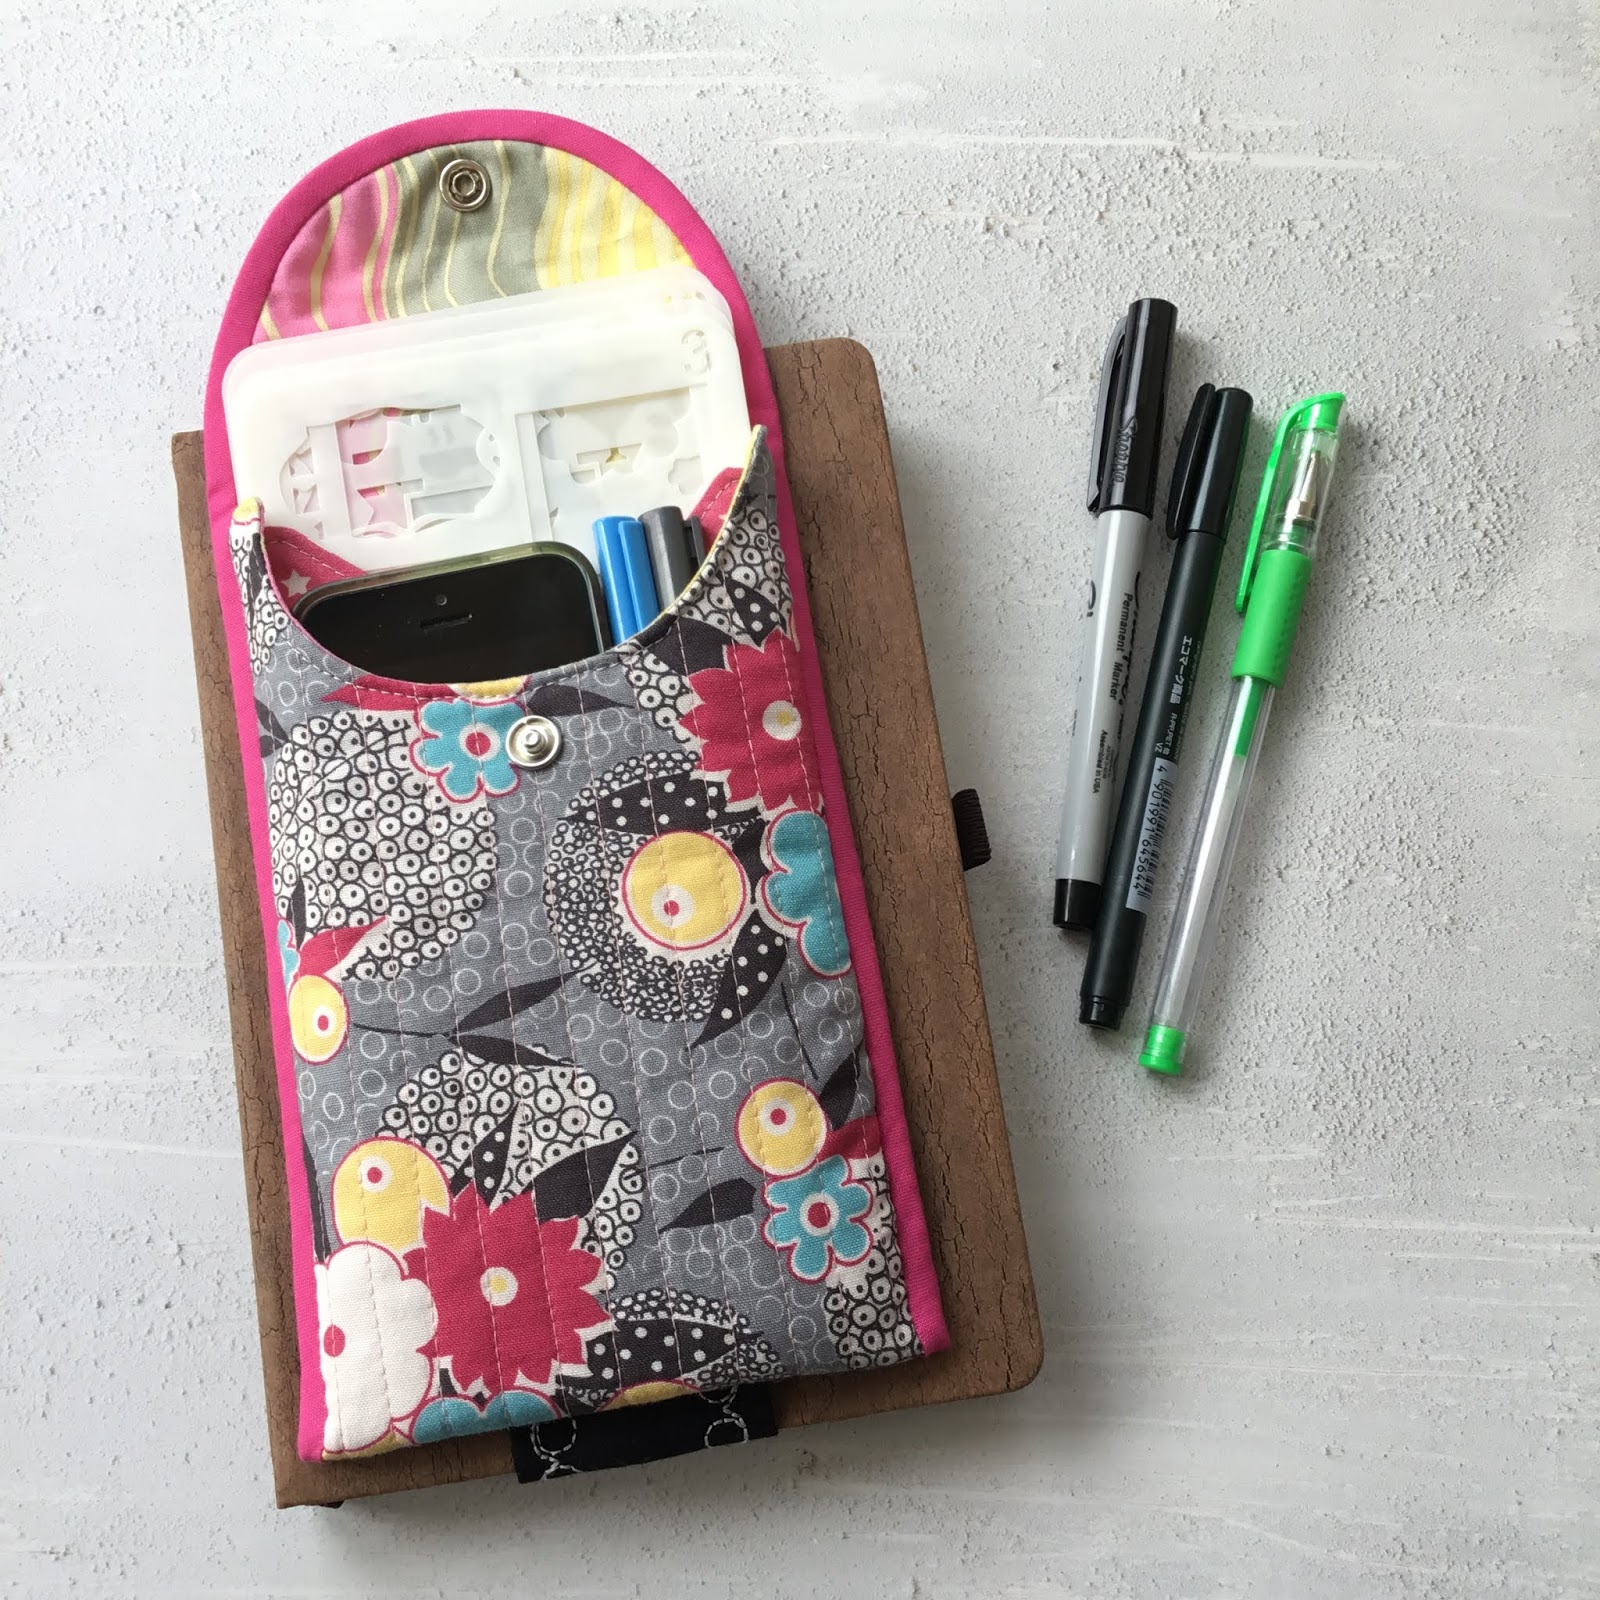 How to Make a Crocheted Journal Pouch, Homemade Bullet Journal Supplies